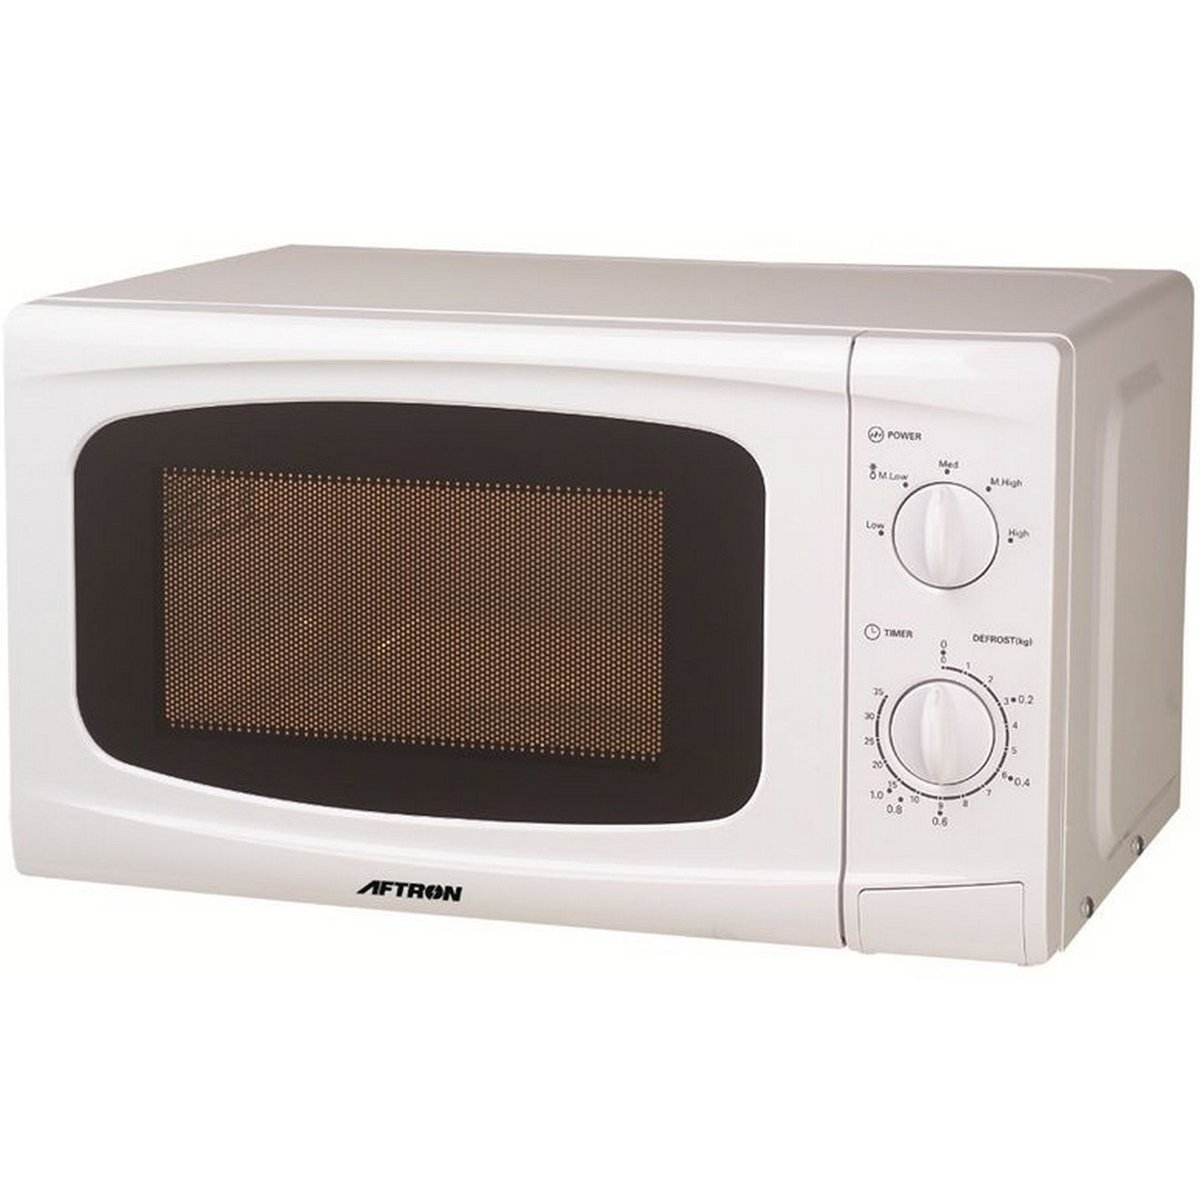 Aftron Microwave Oven  AFMW205M 20Ltr